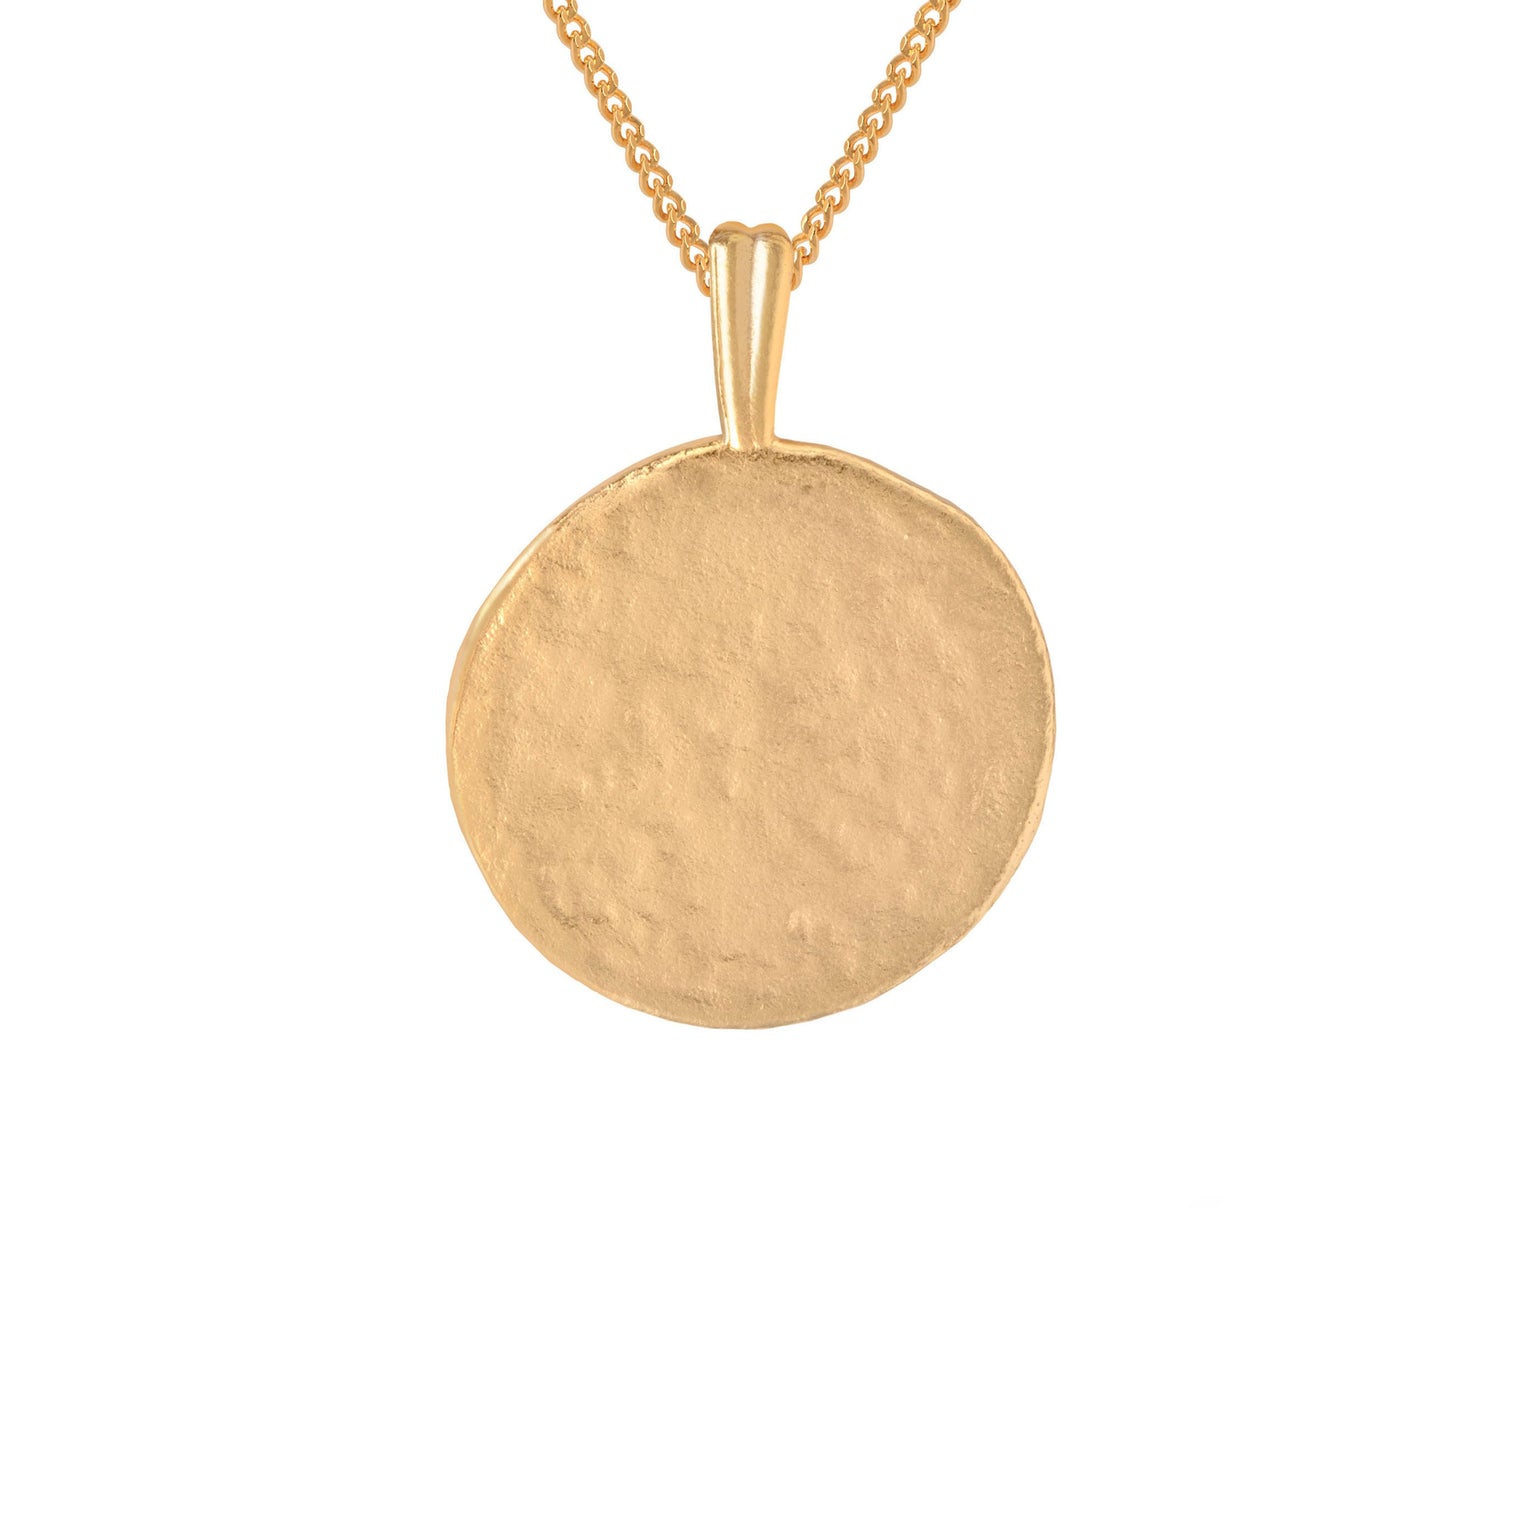 Virgo Zodiac Pendant Necklace in Gold back of pendant